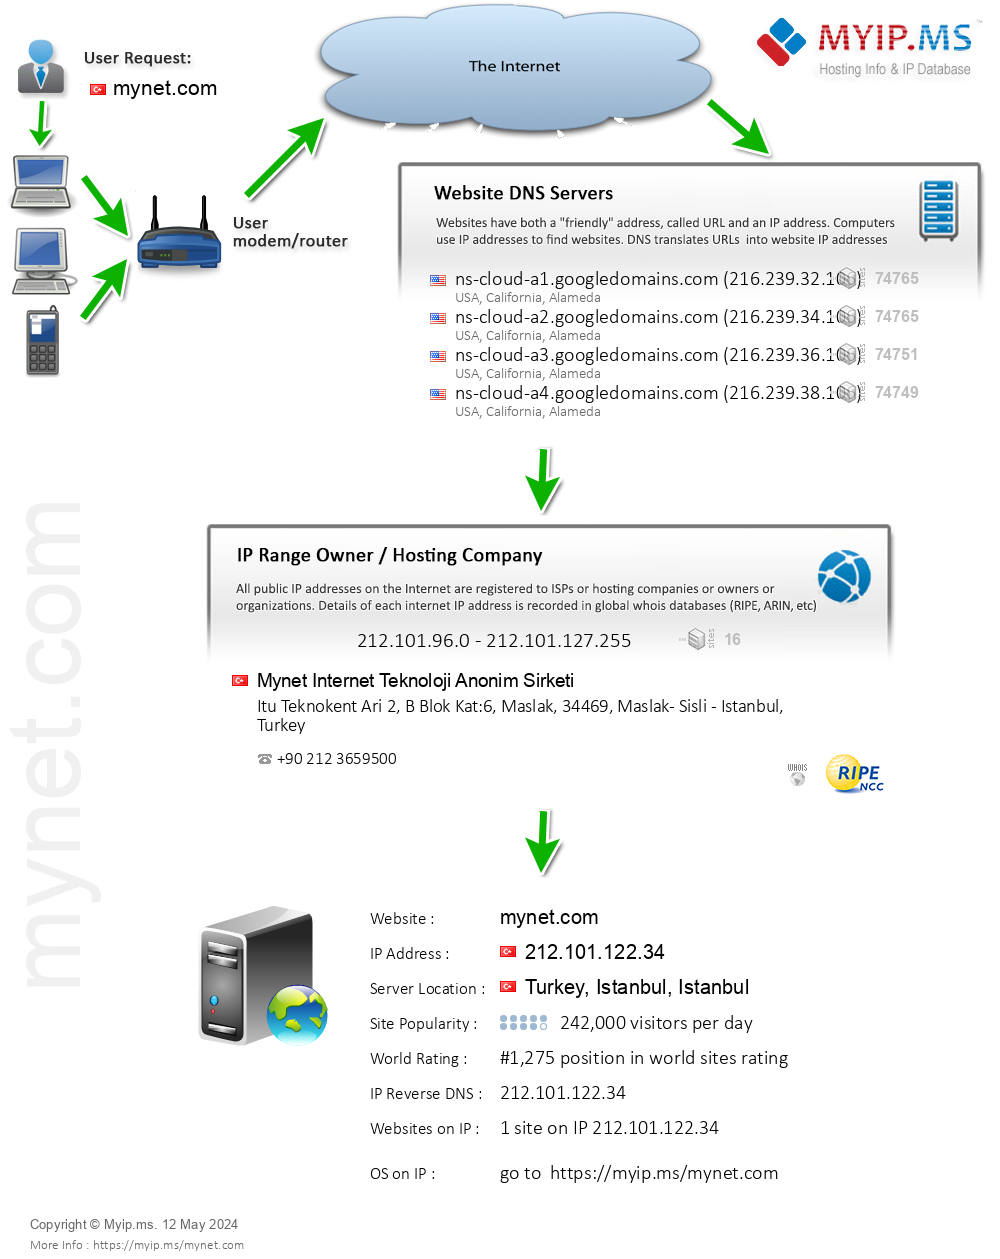 Mynet.com - Website Hosting Visual IP Diagram